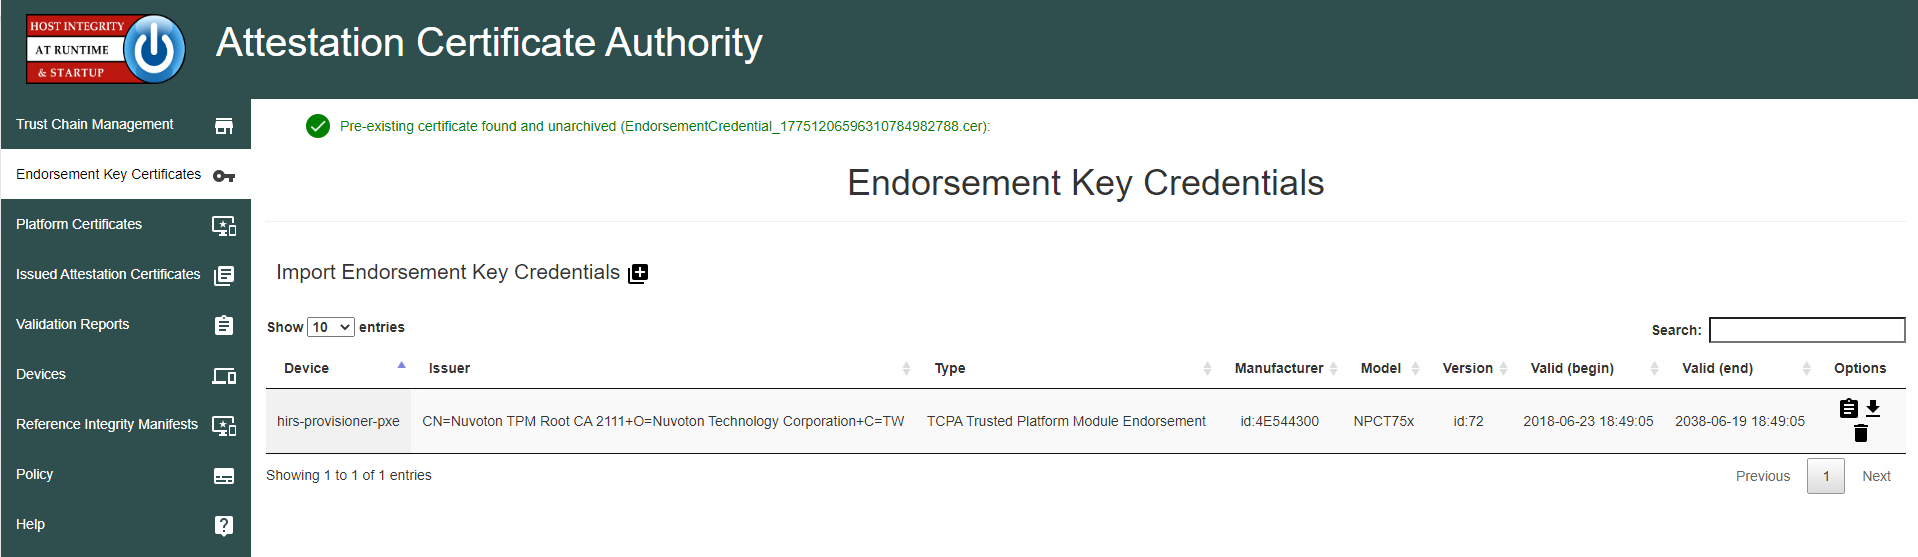 Screenshot of displaying a list of endorsement key certificates under Endorsement Key Credentials